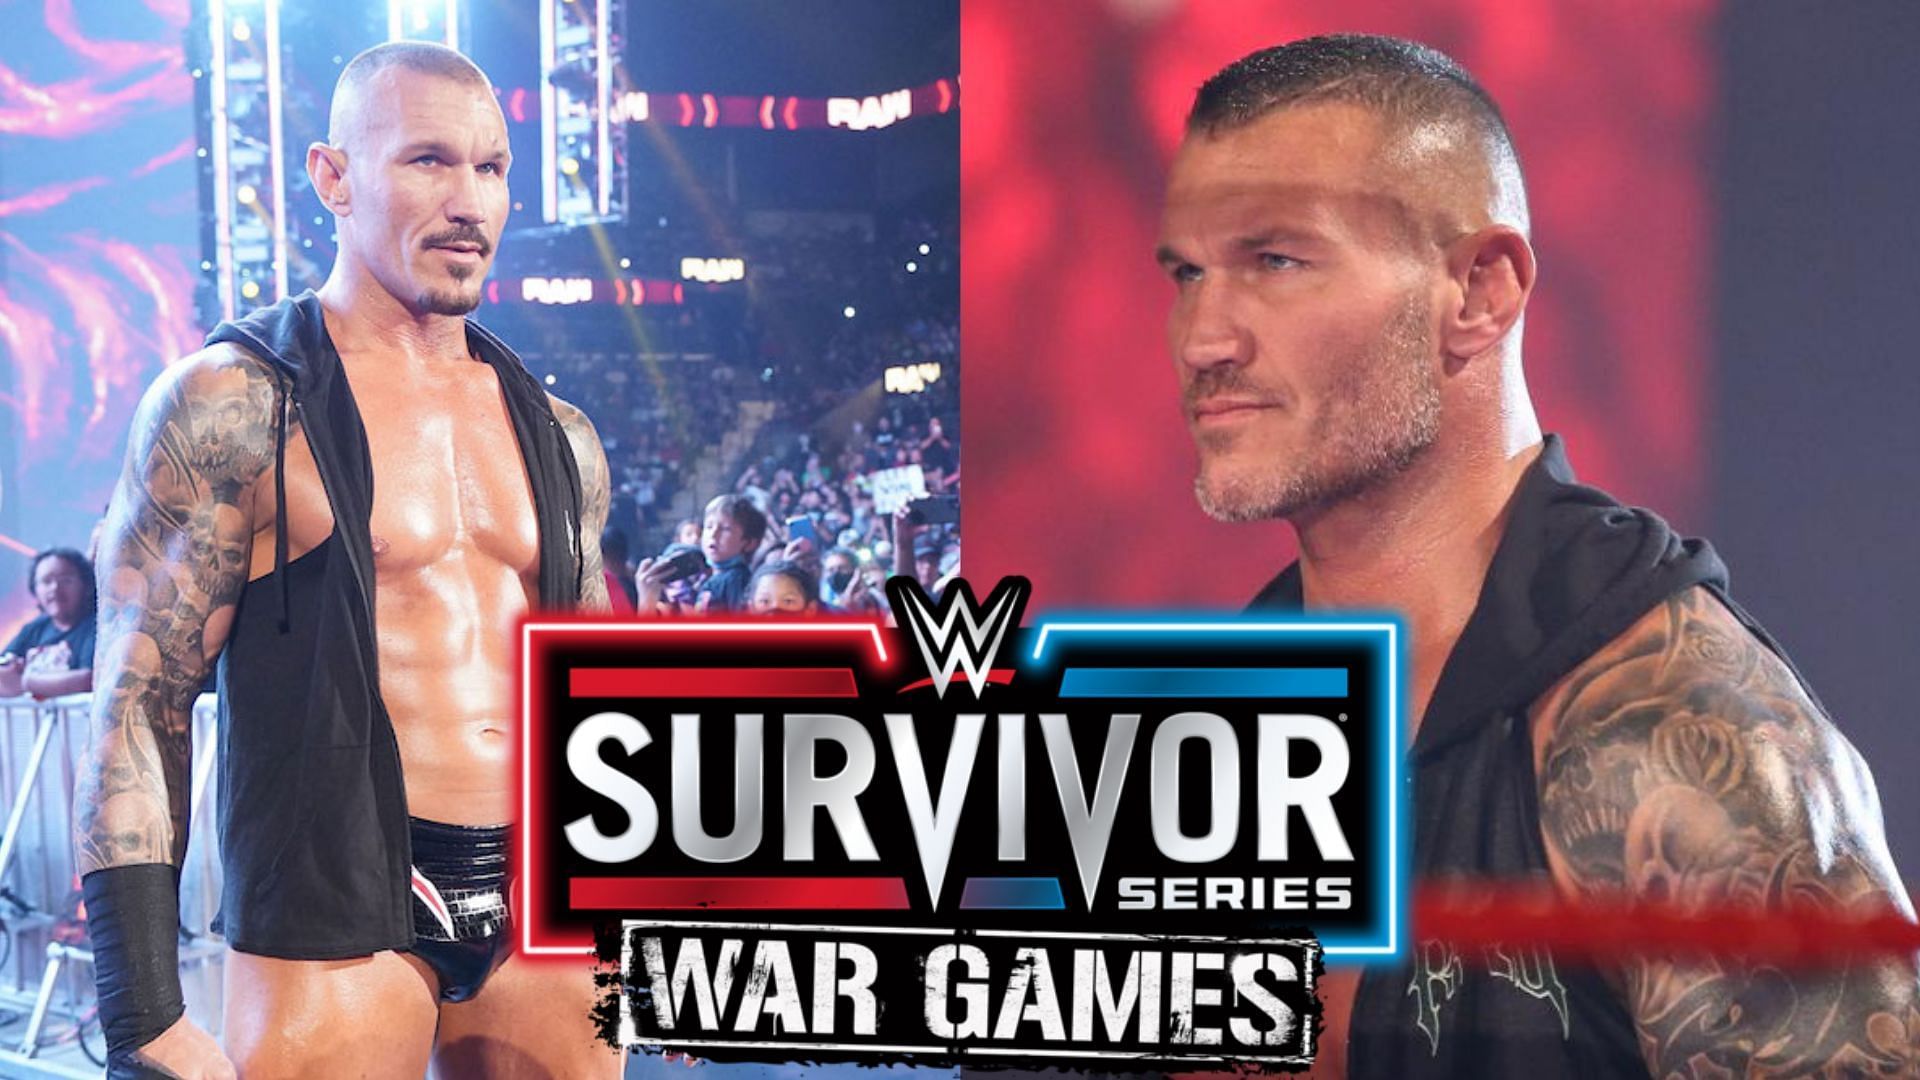 Randy Orton will be returning at Survivor Series